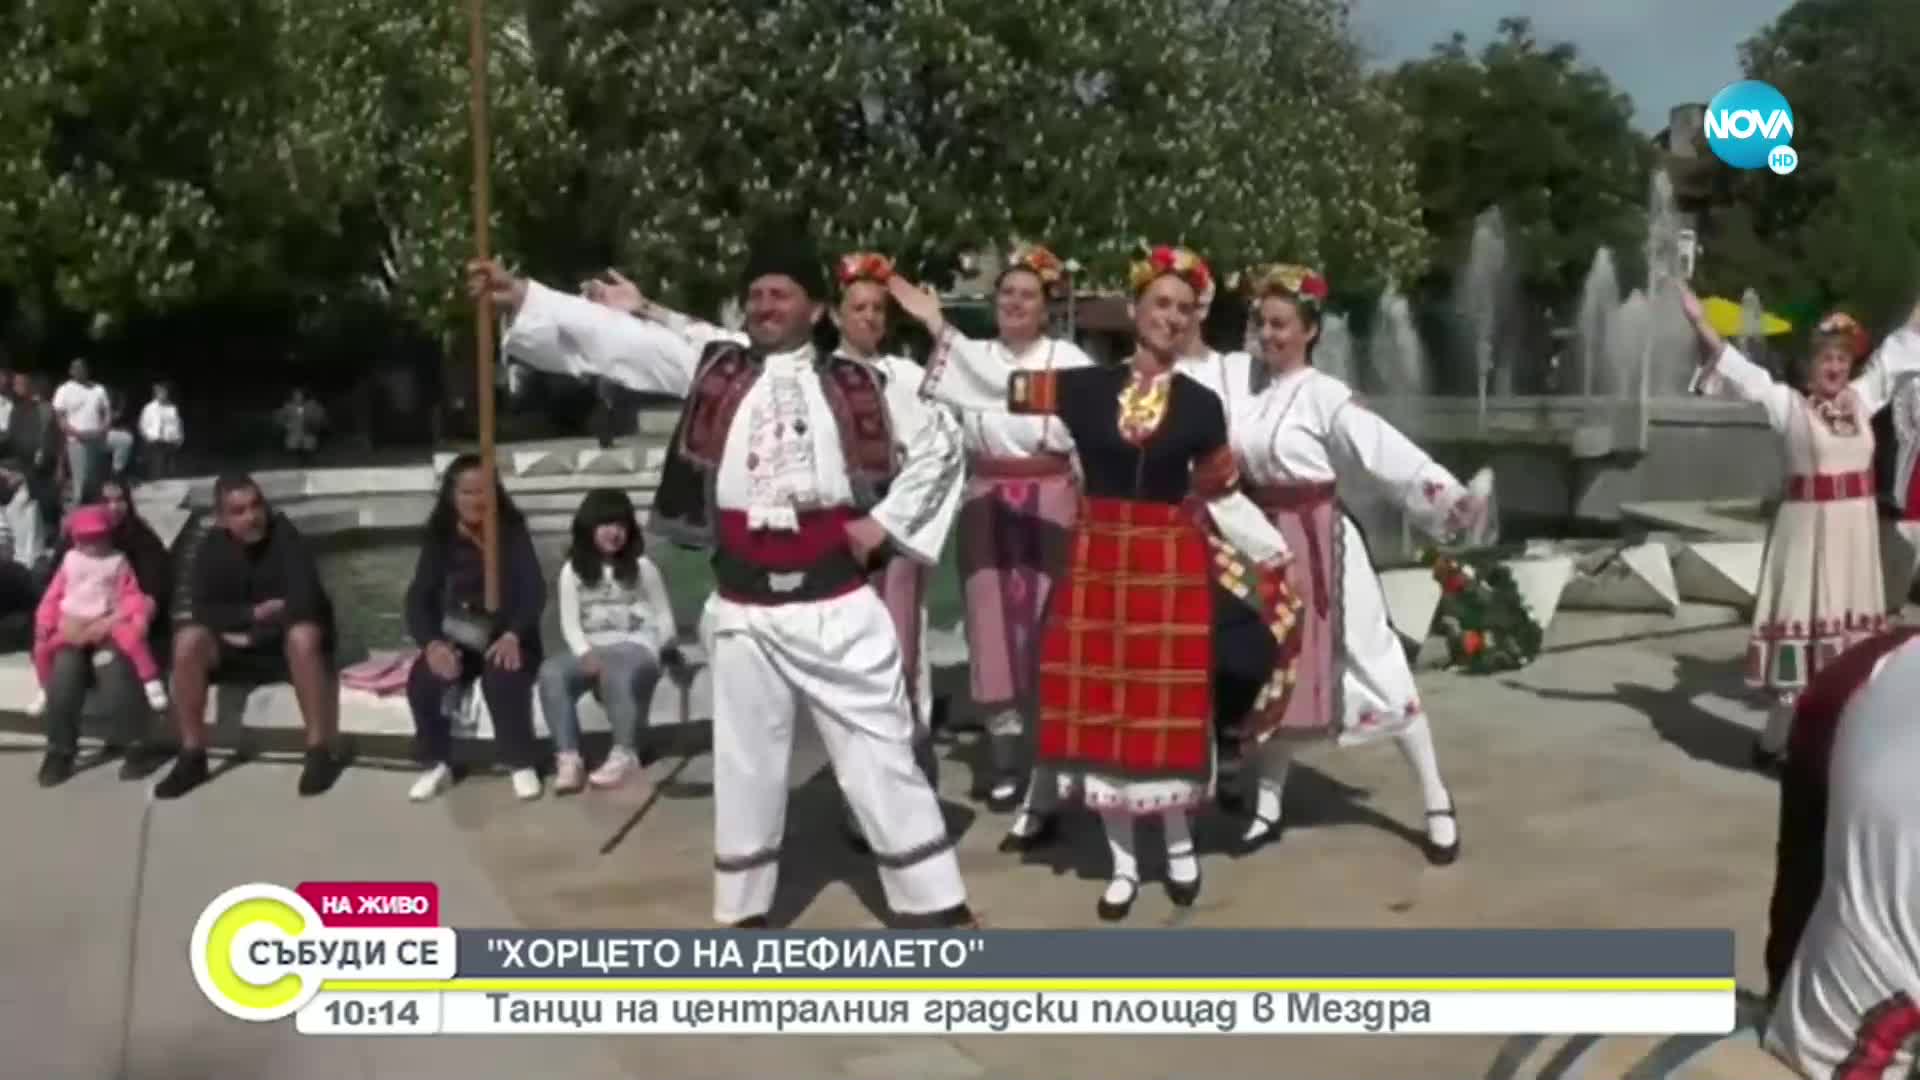 Фолклорен фестивал "Хорцето на Дефилето" в Мездра